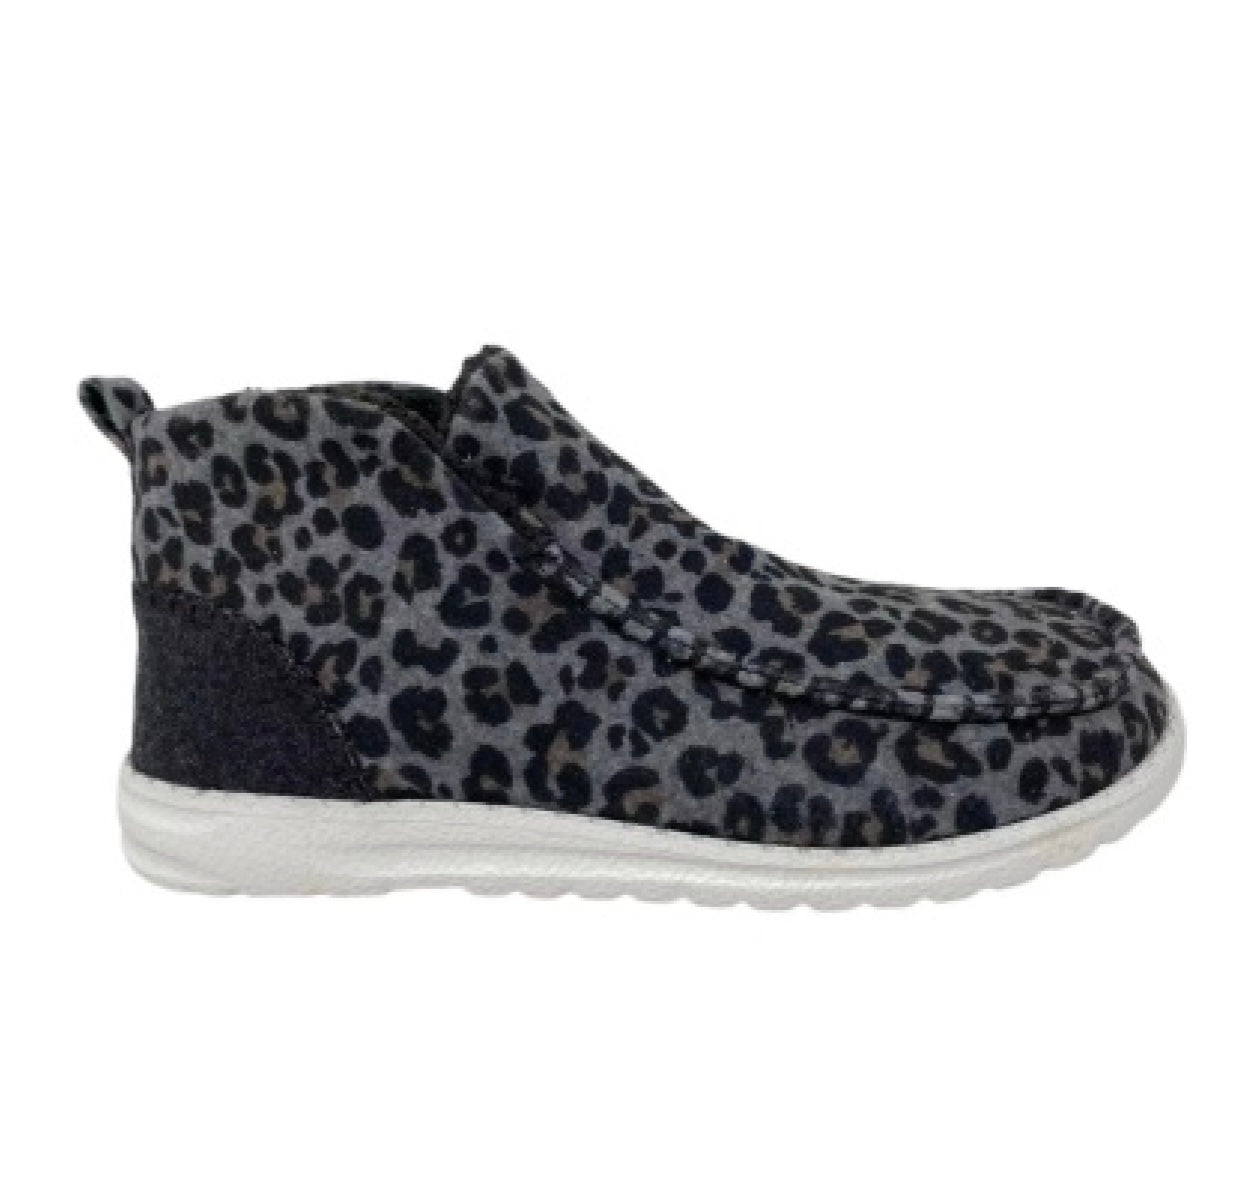 Shoes Women’s Grey Leopard GJSP0111-967 Merica